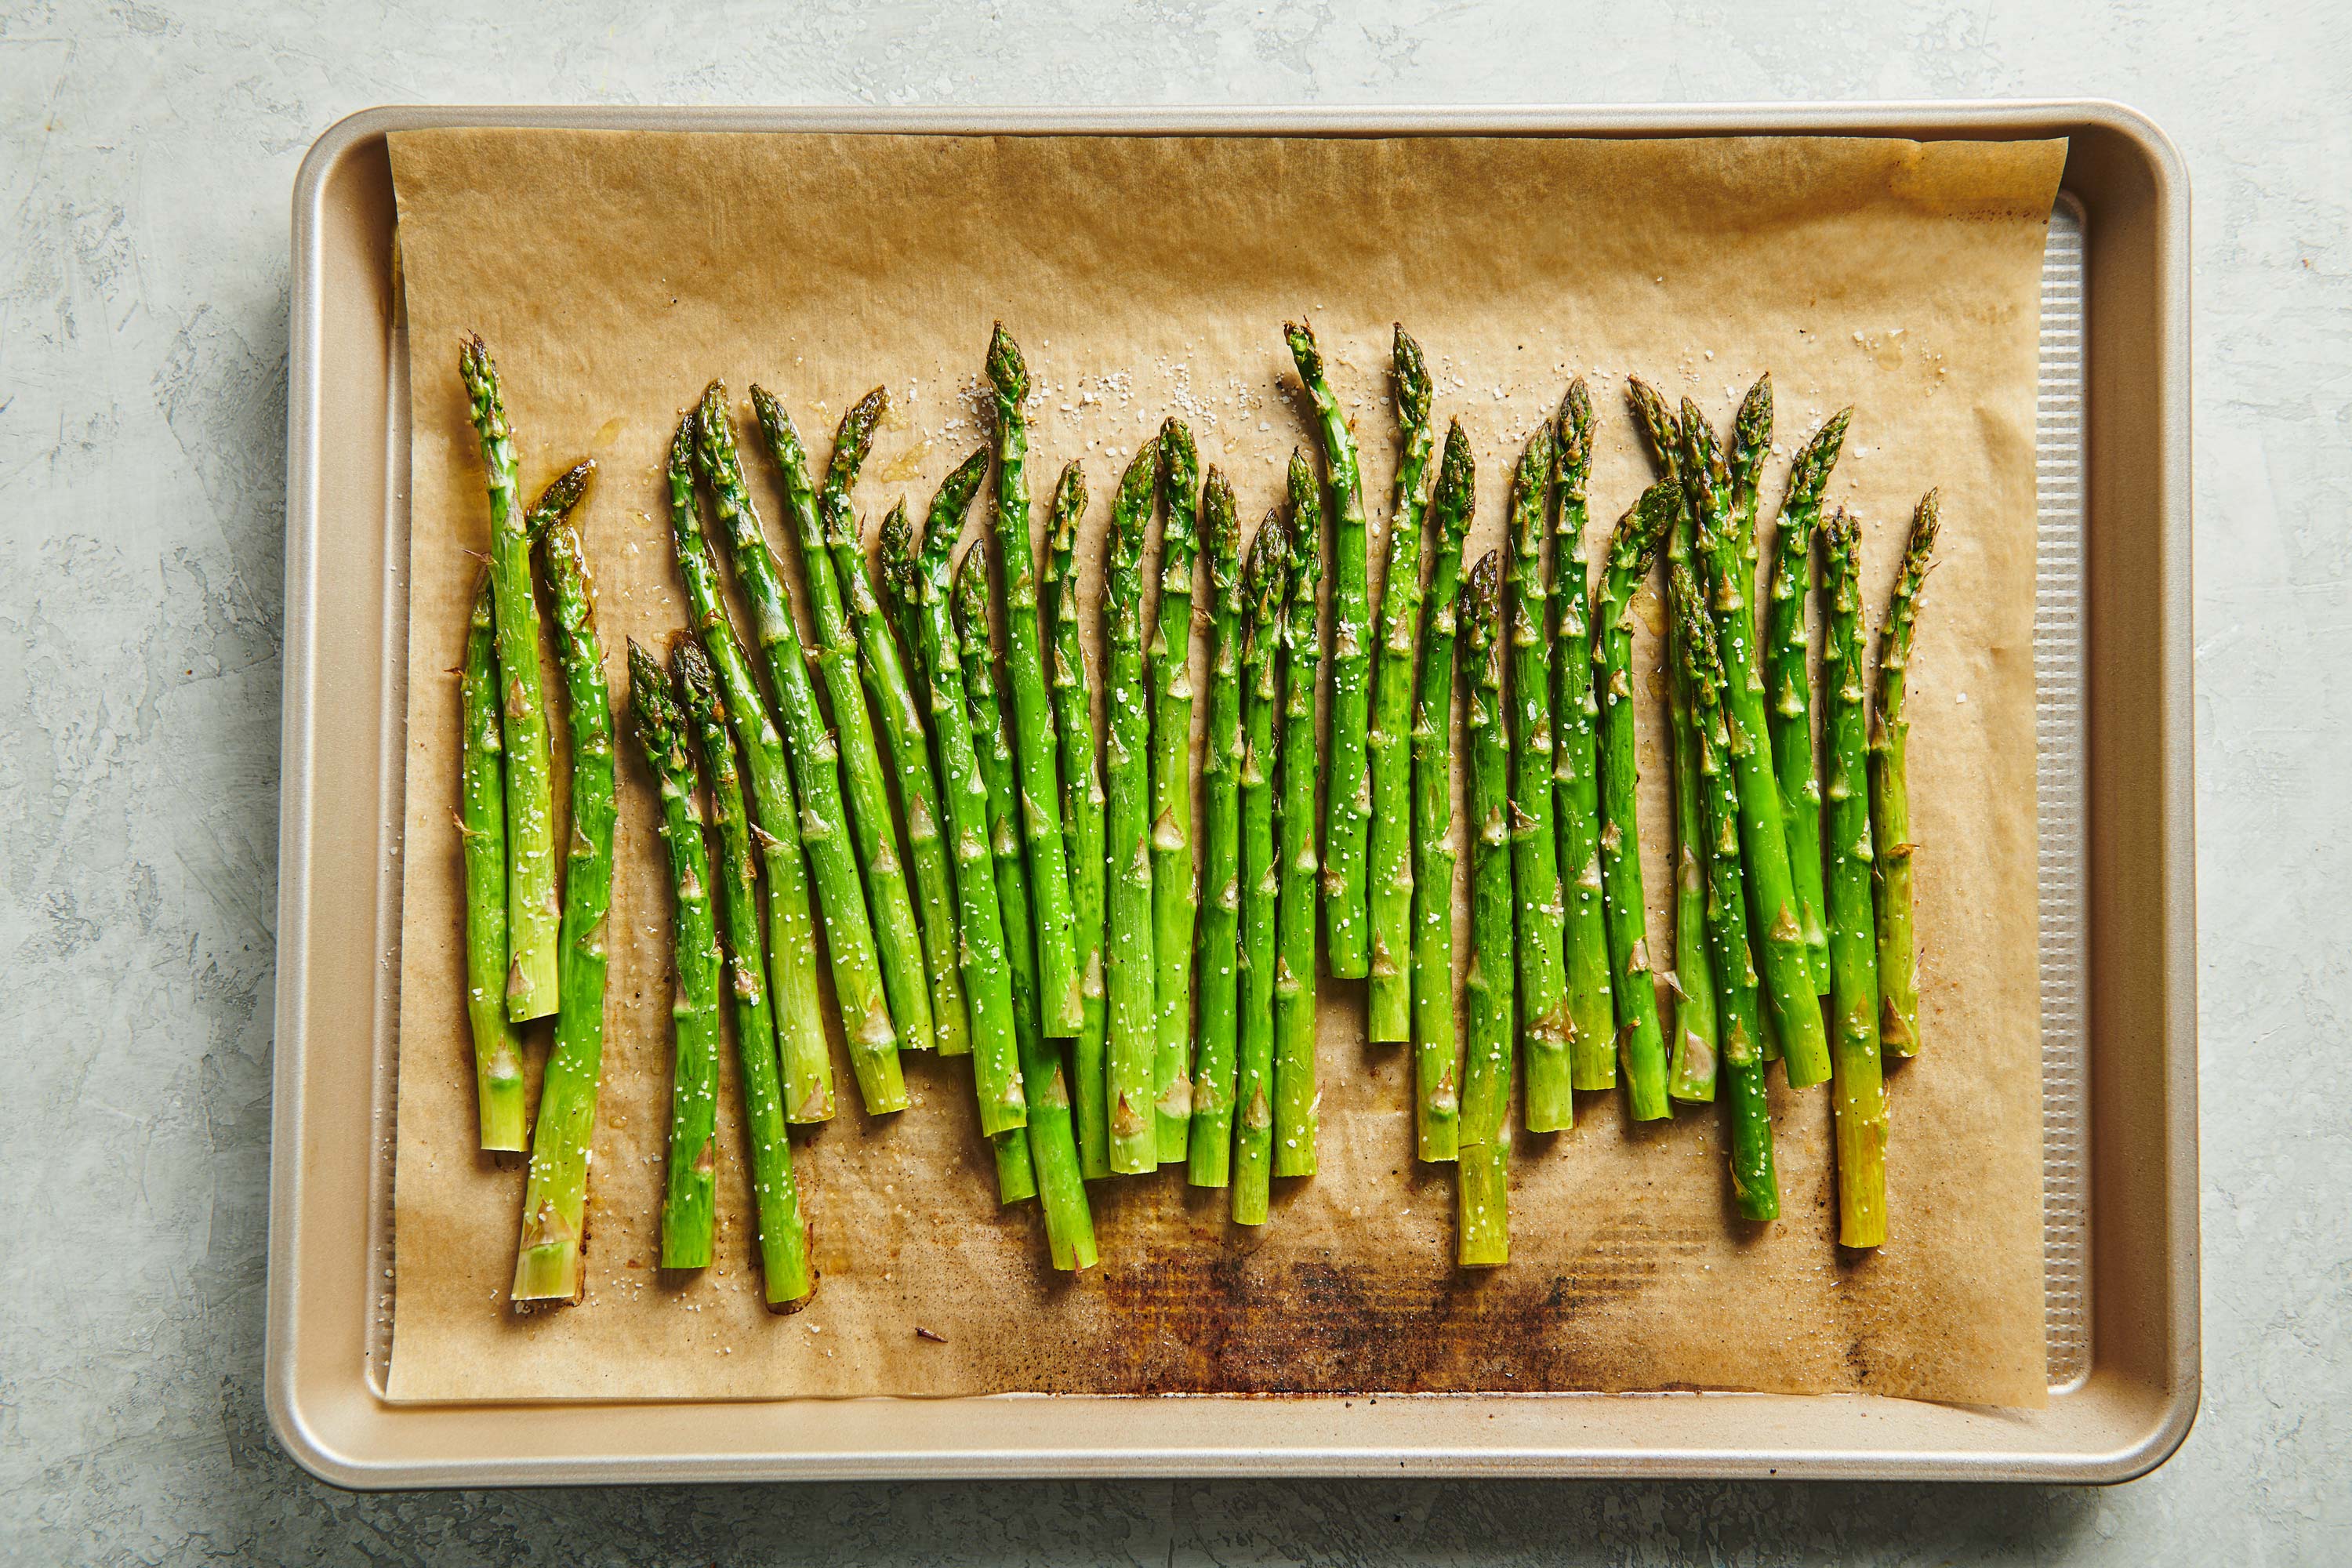 Roasted Asparagus on baking pan.